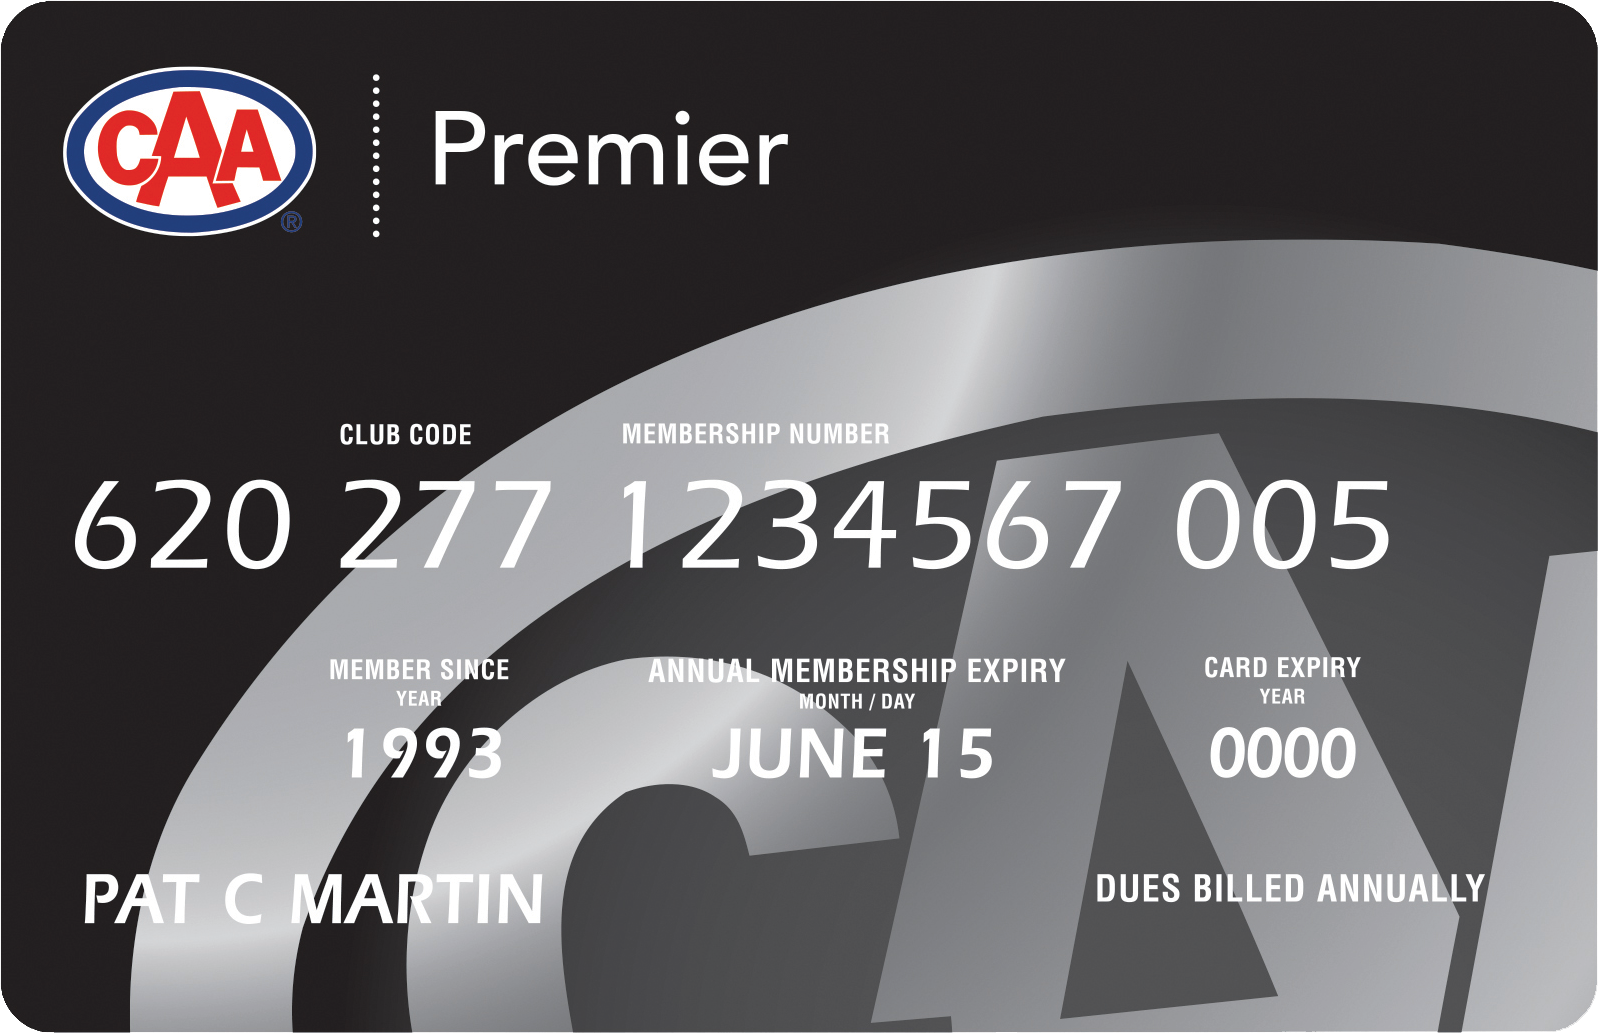 Image of a Premier CAA Membership card